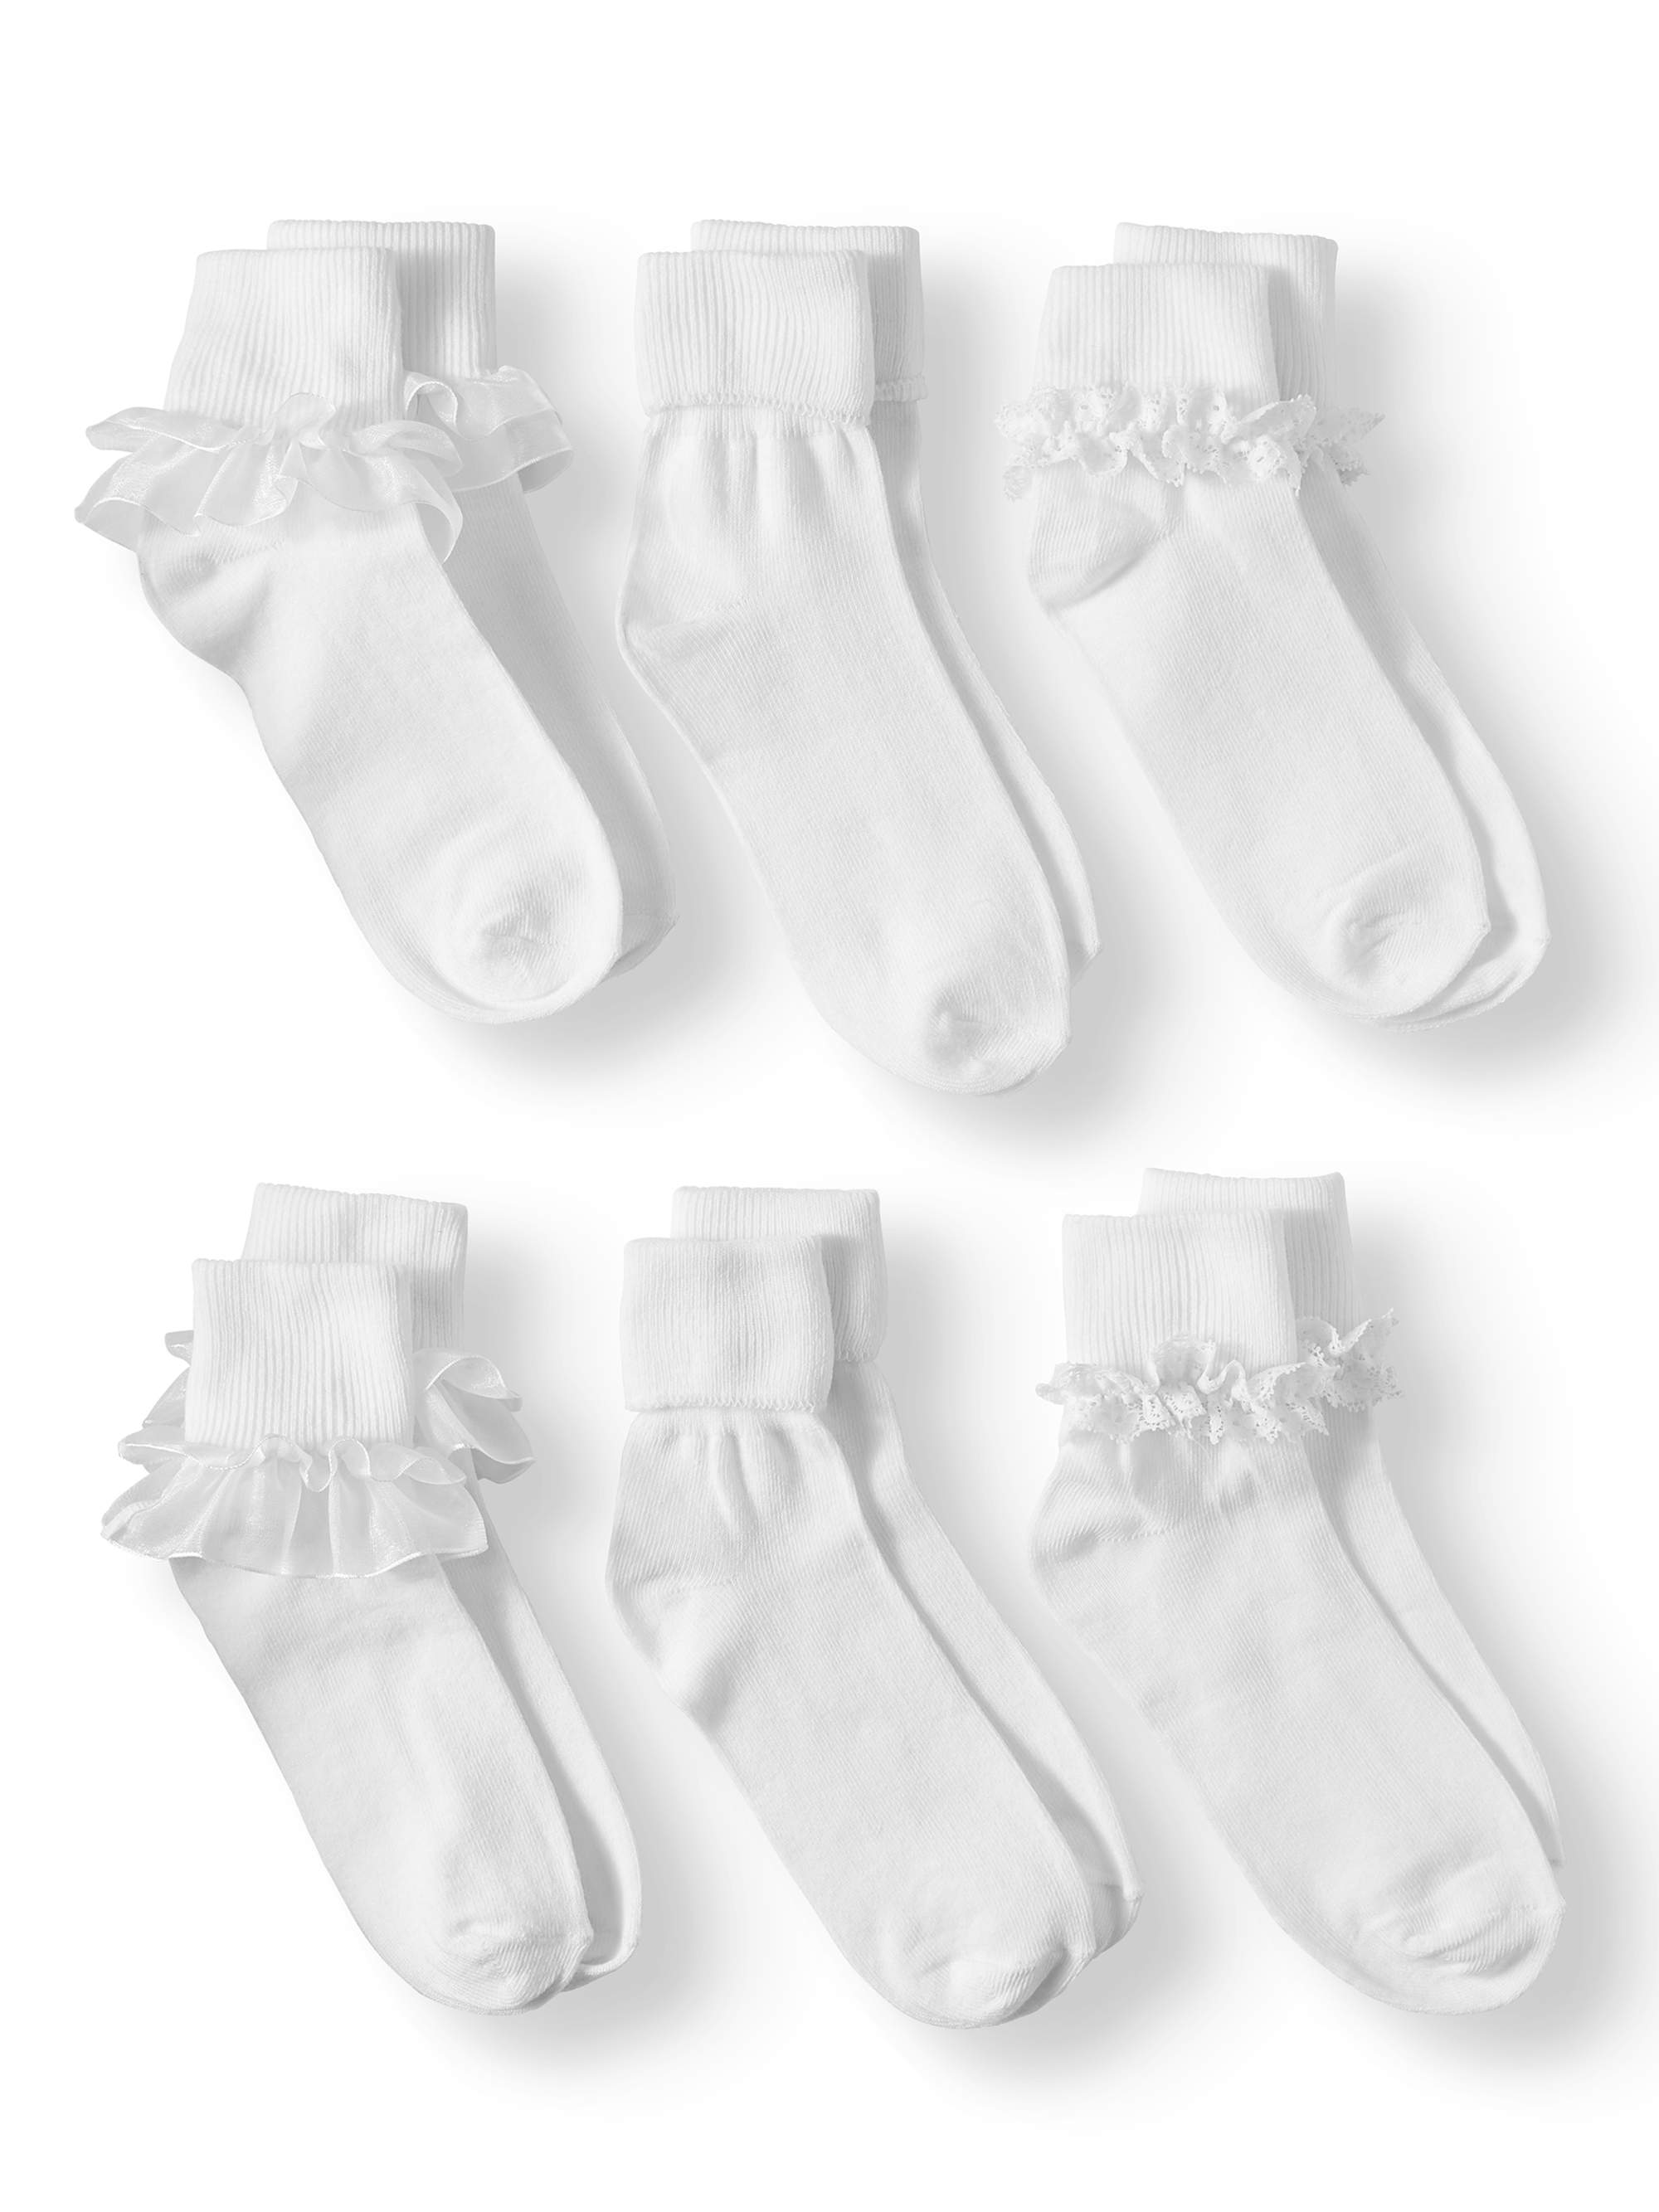 Wonder Nation Girls Lace Dress Socks 6-Pack, Sizes S-L - image 1 of 5